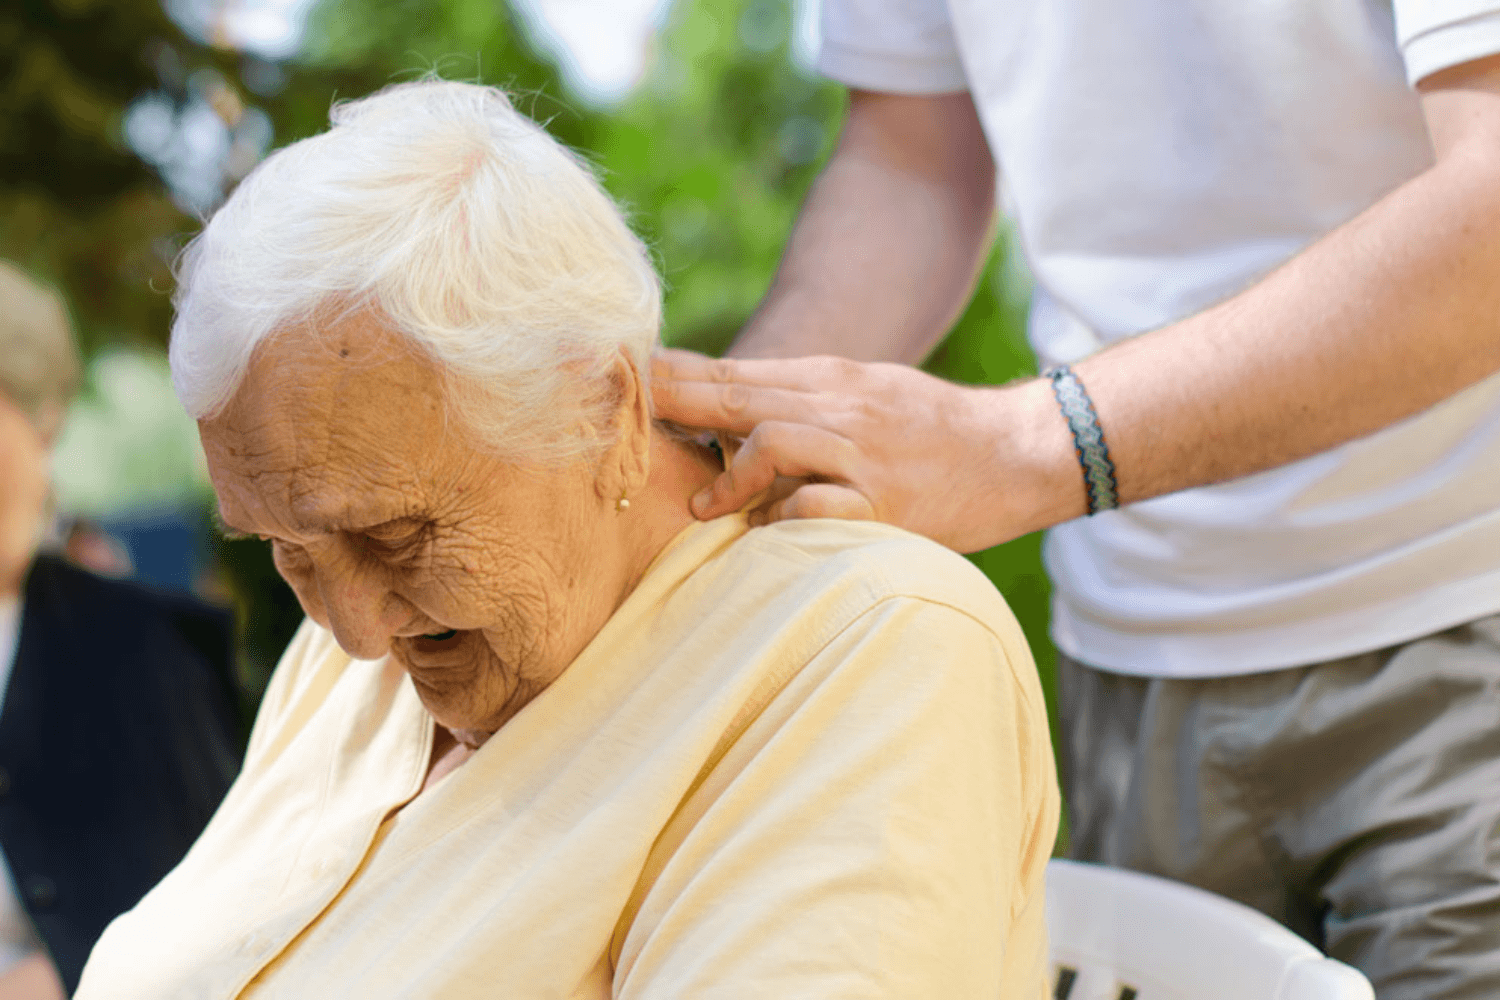 Elderly lady receiving back massage